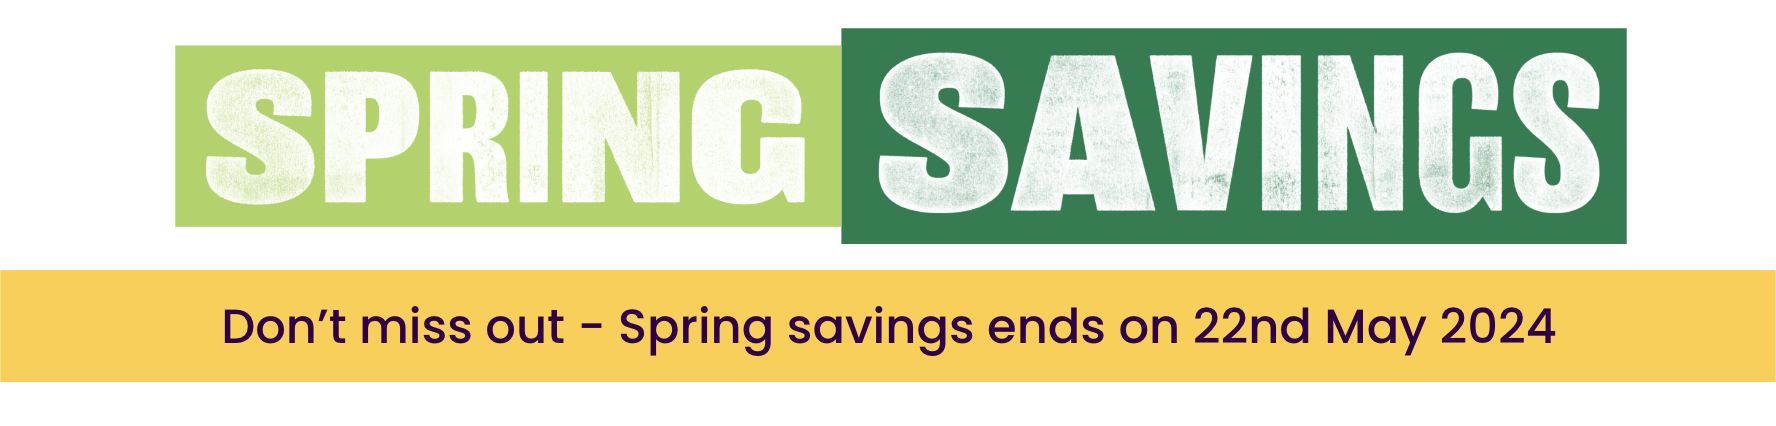 Spring savings end 23rd april